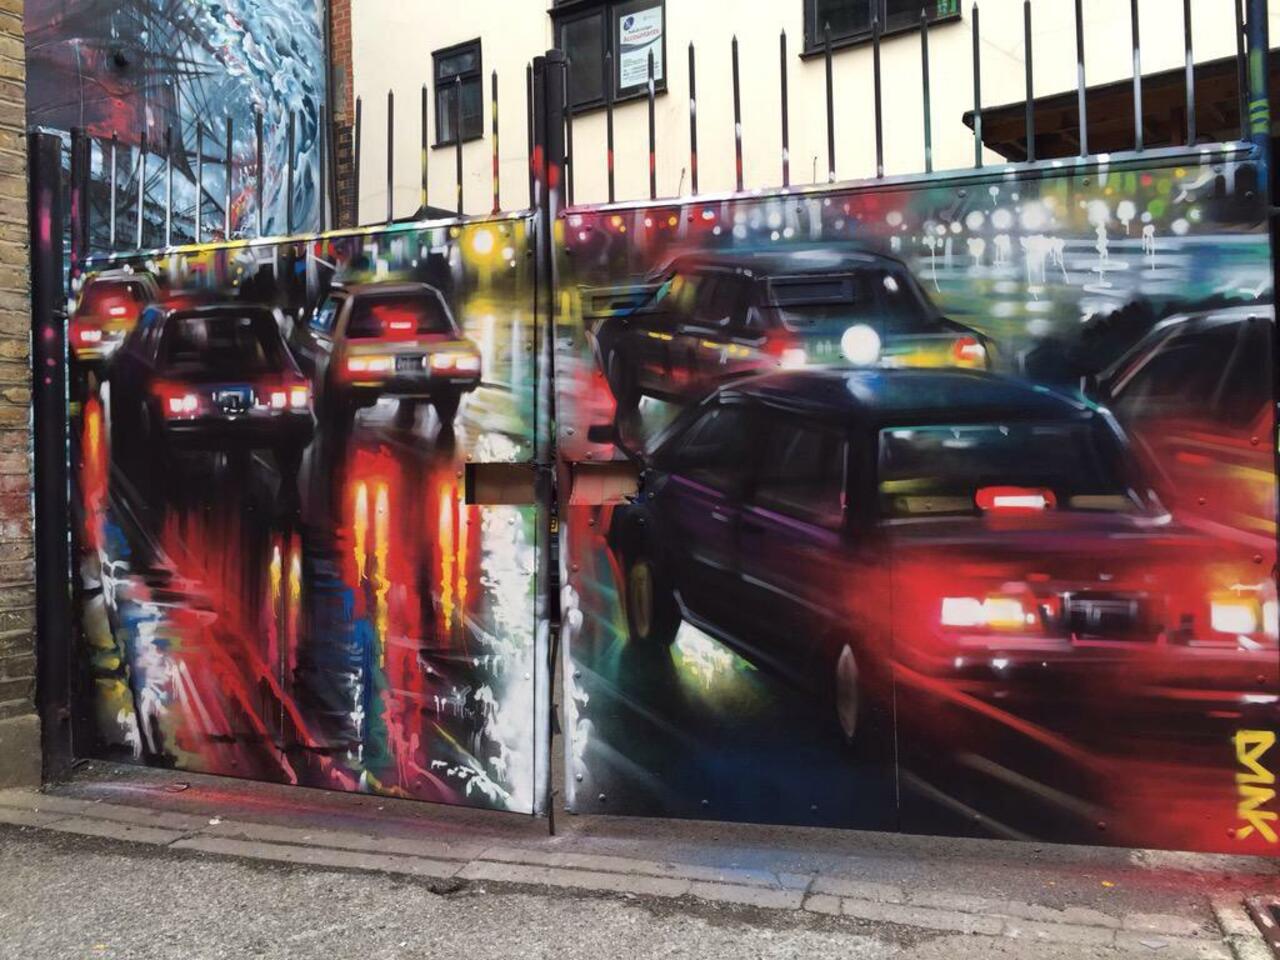 New tumblr post: "New Street Art by DanKitchener in Brick Lane London 

#art #graffiti #mural #streetart http://t.co/Uwk9P4O3S5" …